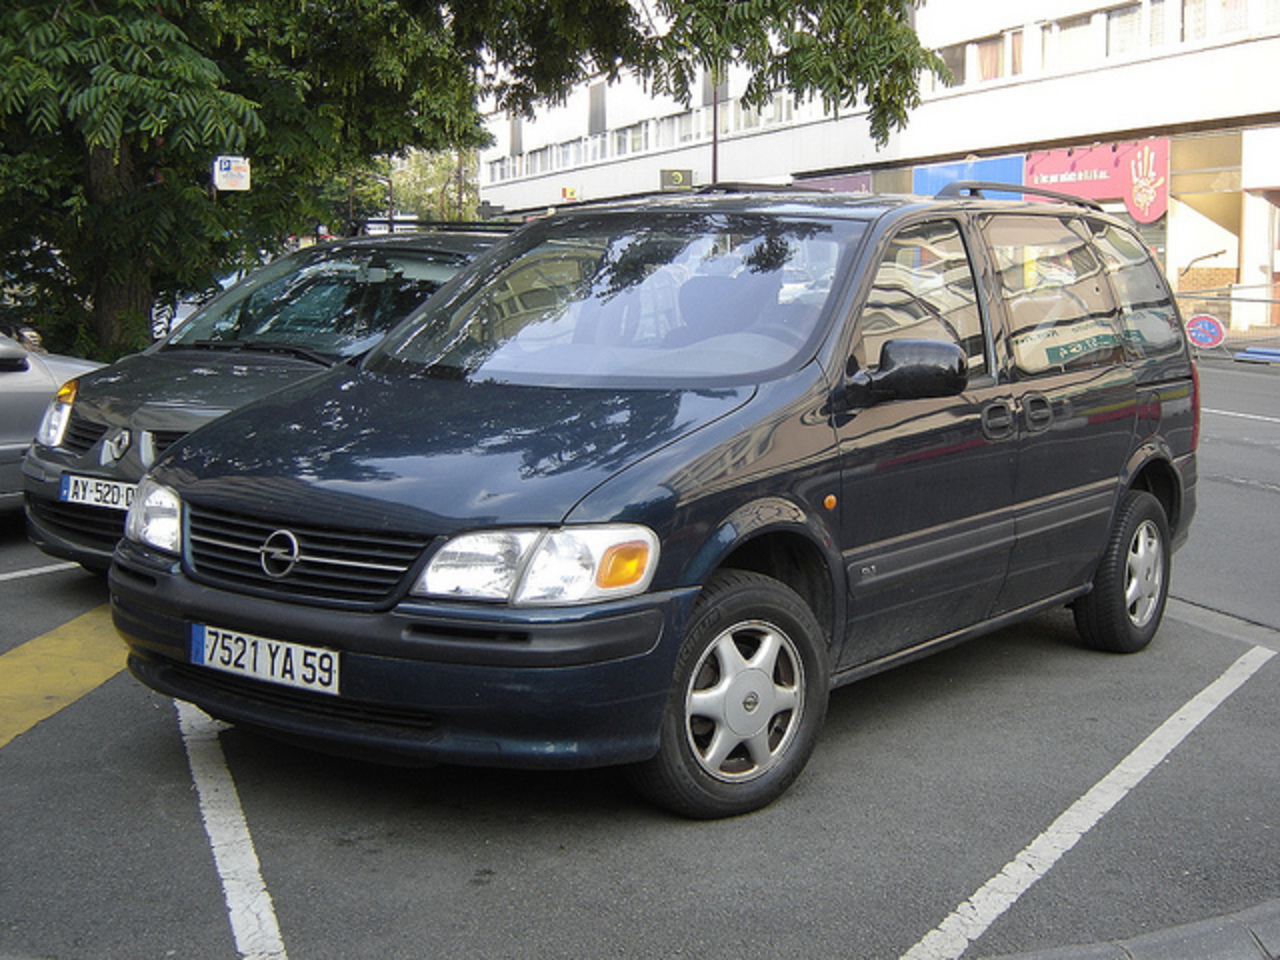 Lille: 1997 Opel Sintra | Flickr - Photo Sharing!